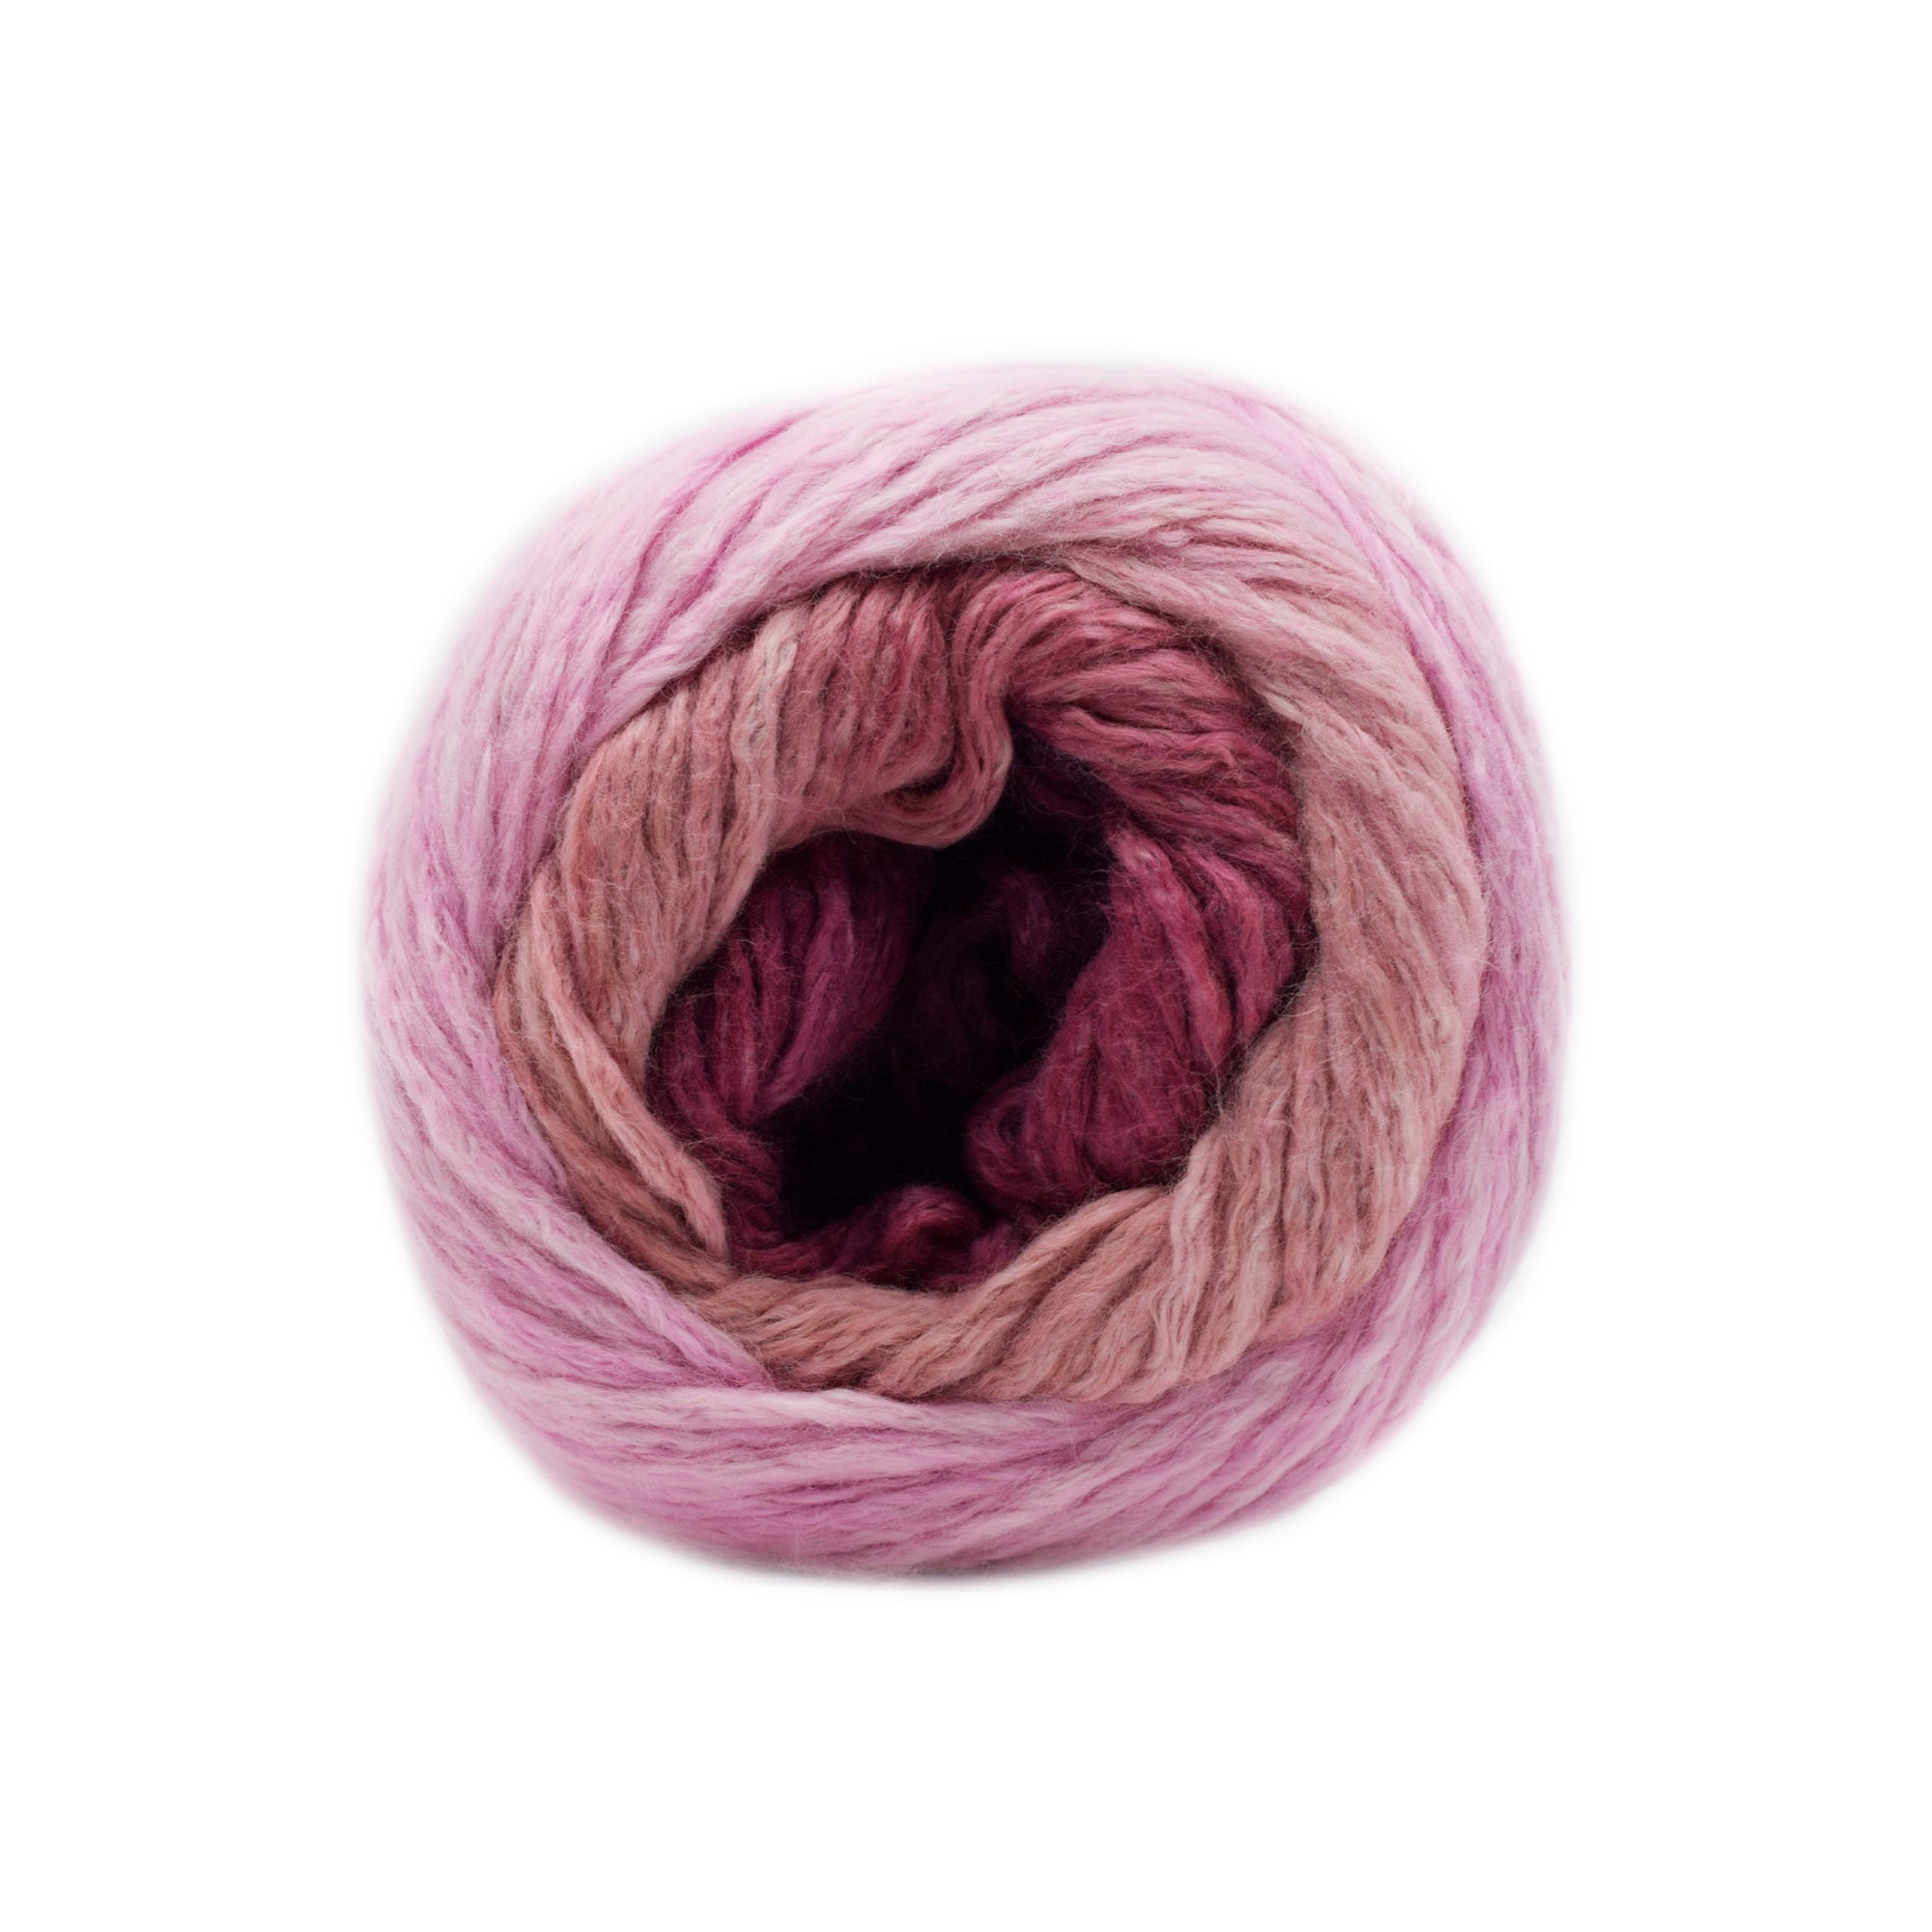 Medium AZ Cypress Yarn Bowl, Star Groove, Golden Grains For Knitting,  Crochet, Yarning #661